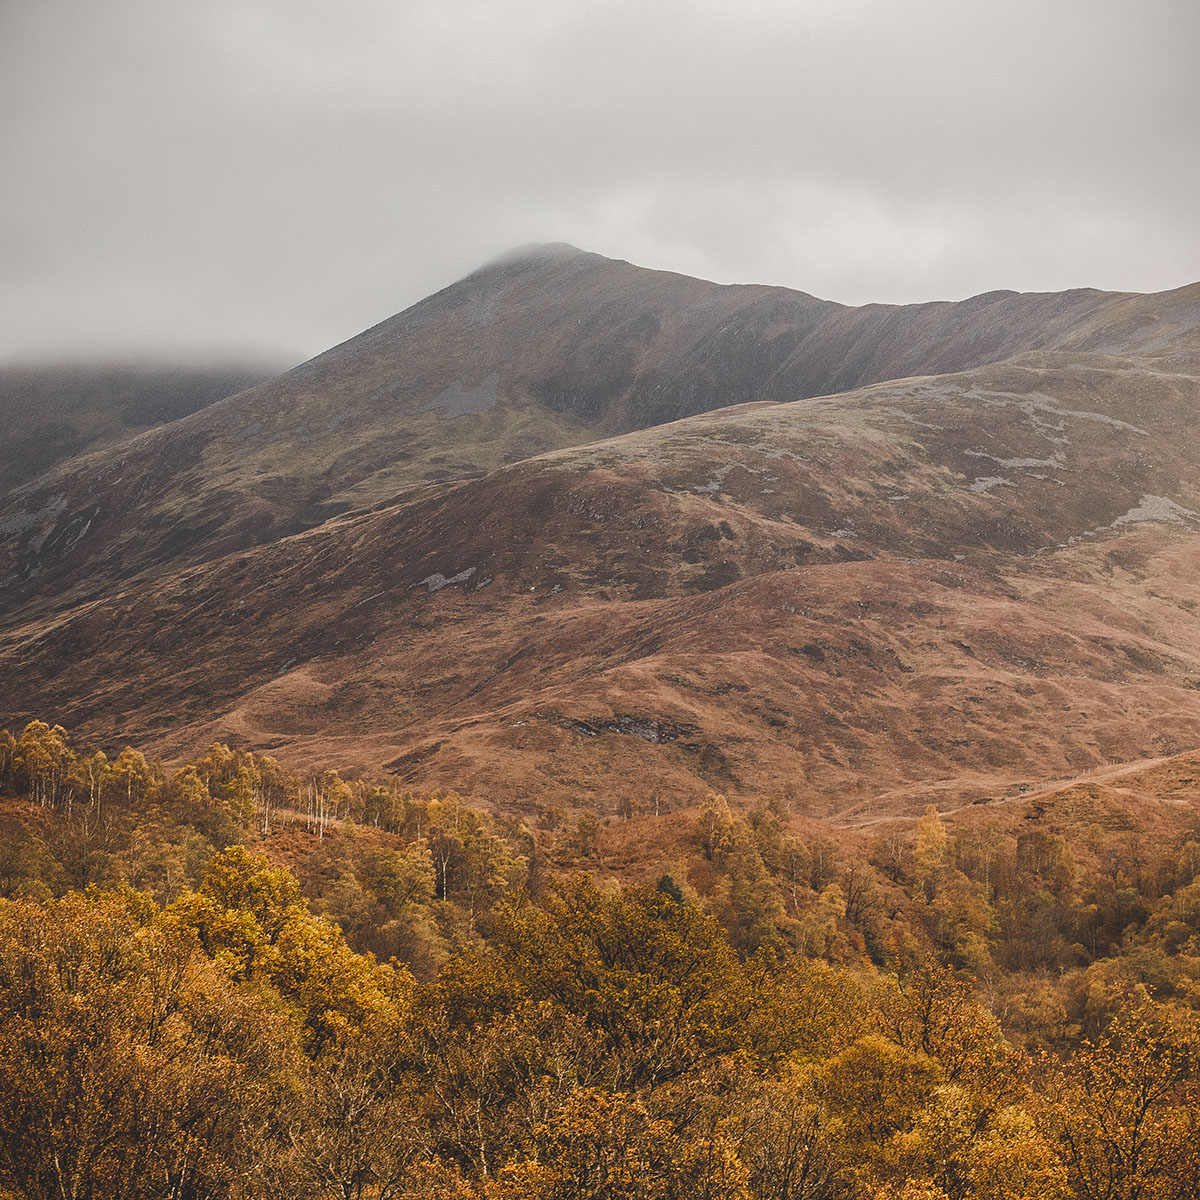 Highlands scotland mountains Fall autumn weather mood Landscape wanderlust explore adventure Hike Authentic narrative impressions